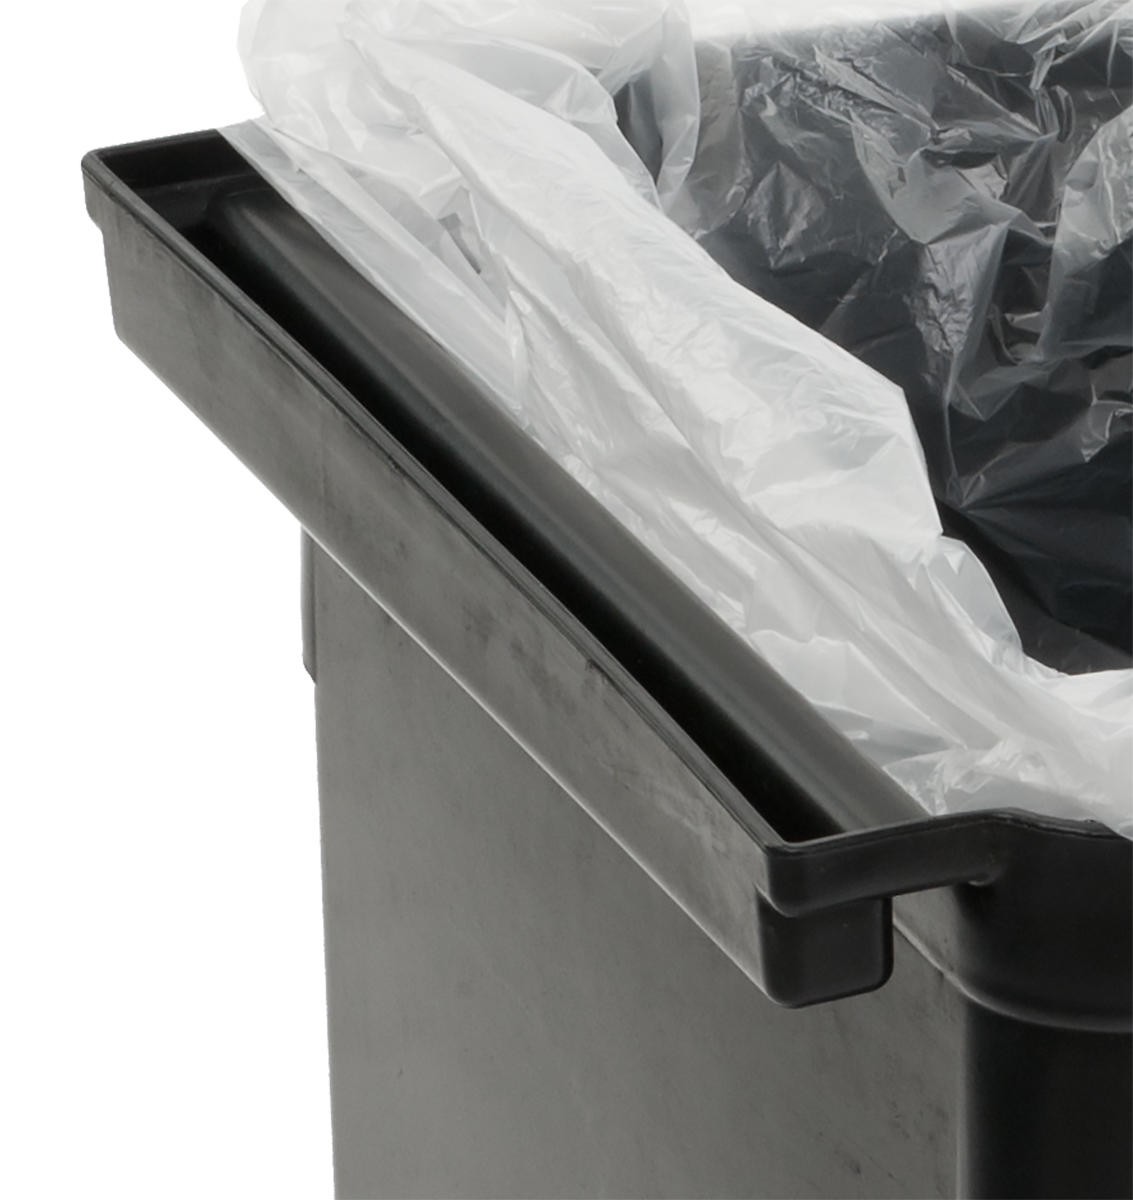 RW Clean Black Plastic Attachable Slim Trash Can - Fits Heavy Duty Rolling  Utility Cart - 13 x 9 1/2 x 22 - 1 count box